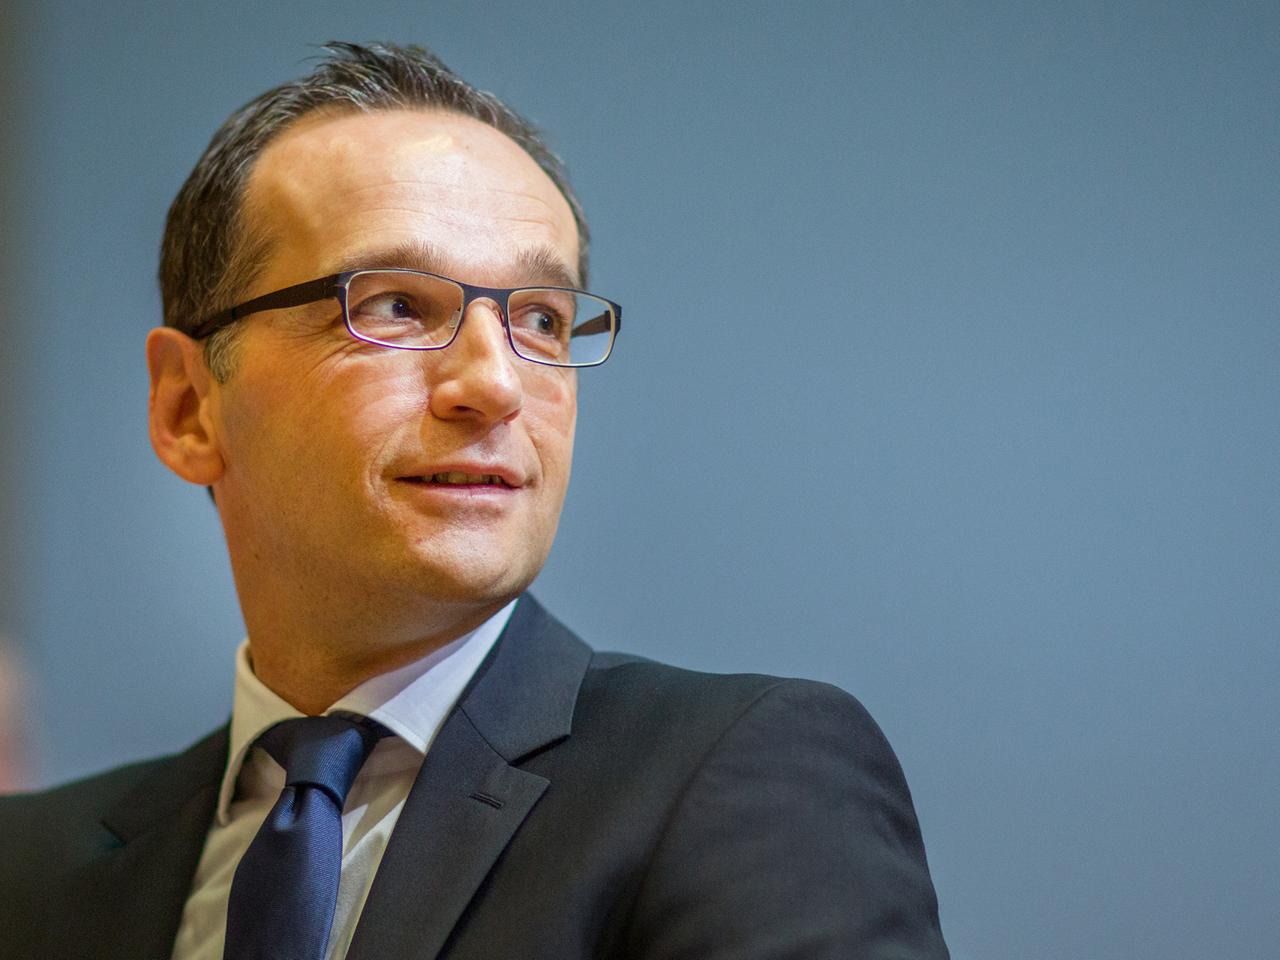 Bundesjustizminister Heiko Maas (SPD)